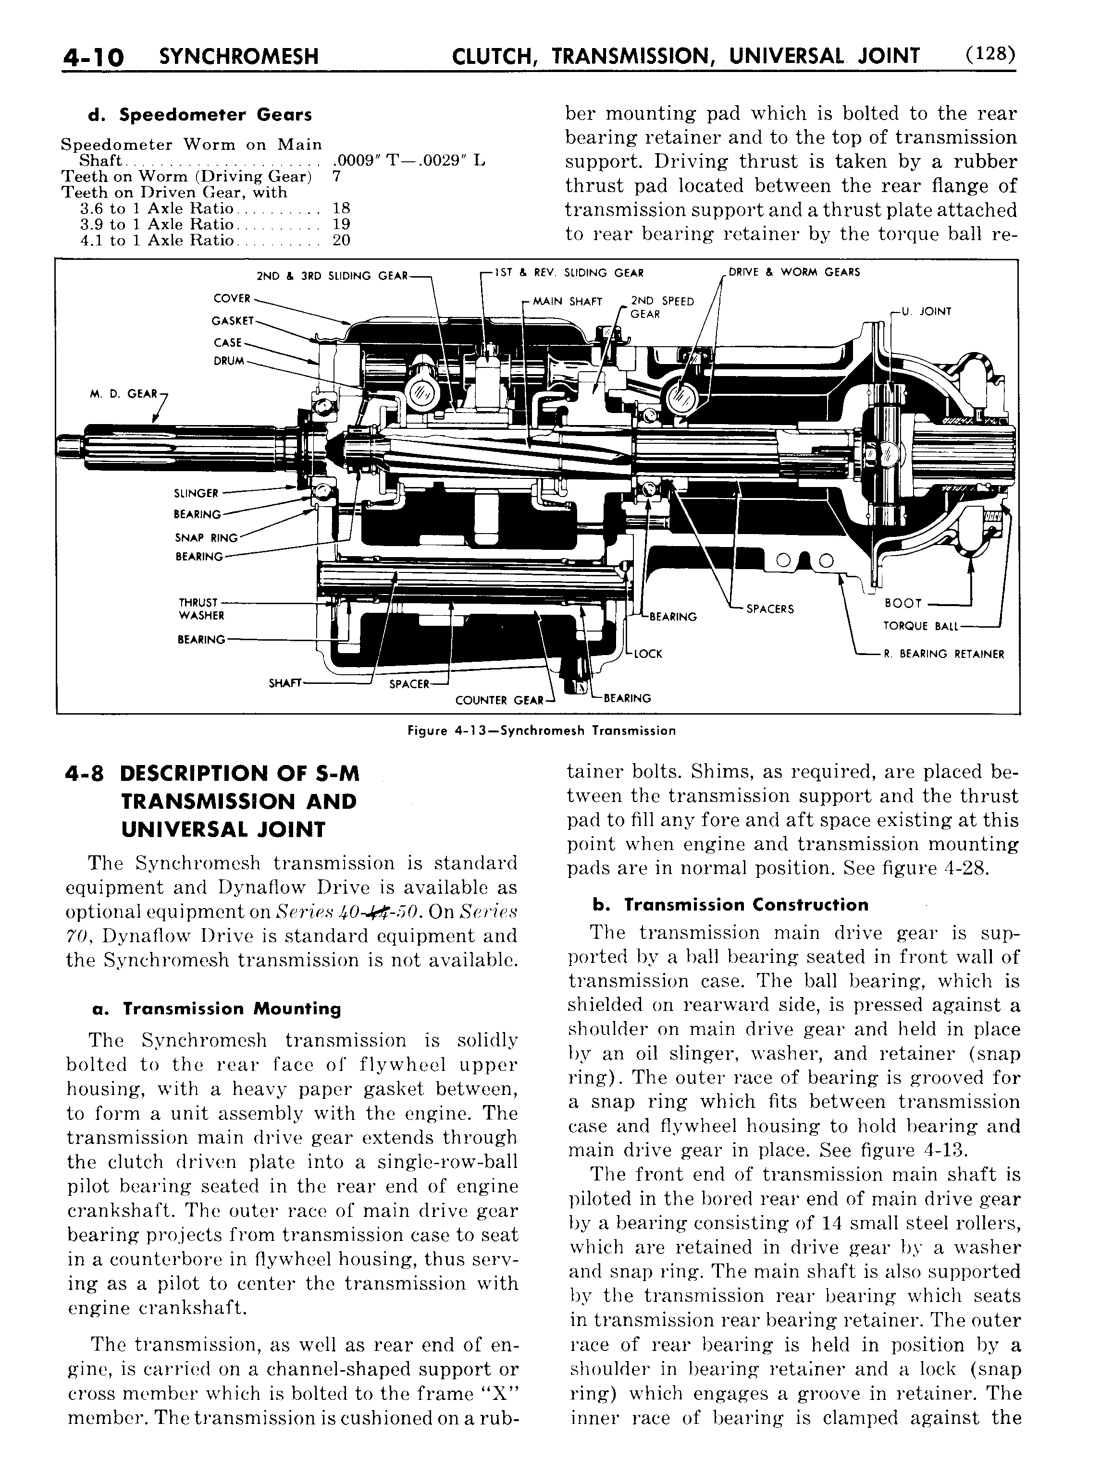 n_05 1951 Buick Shop Manual - Transmission-010-010.jpg